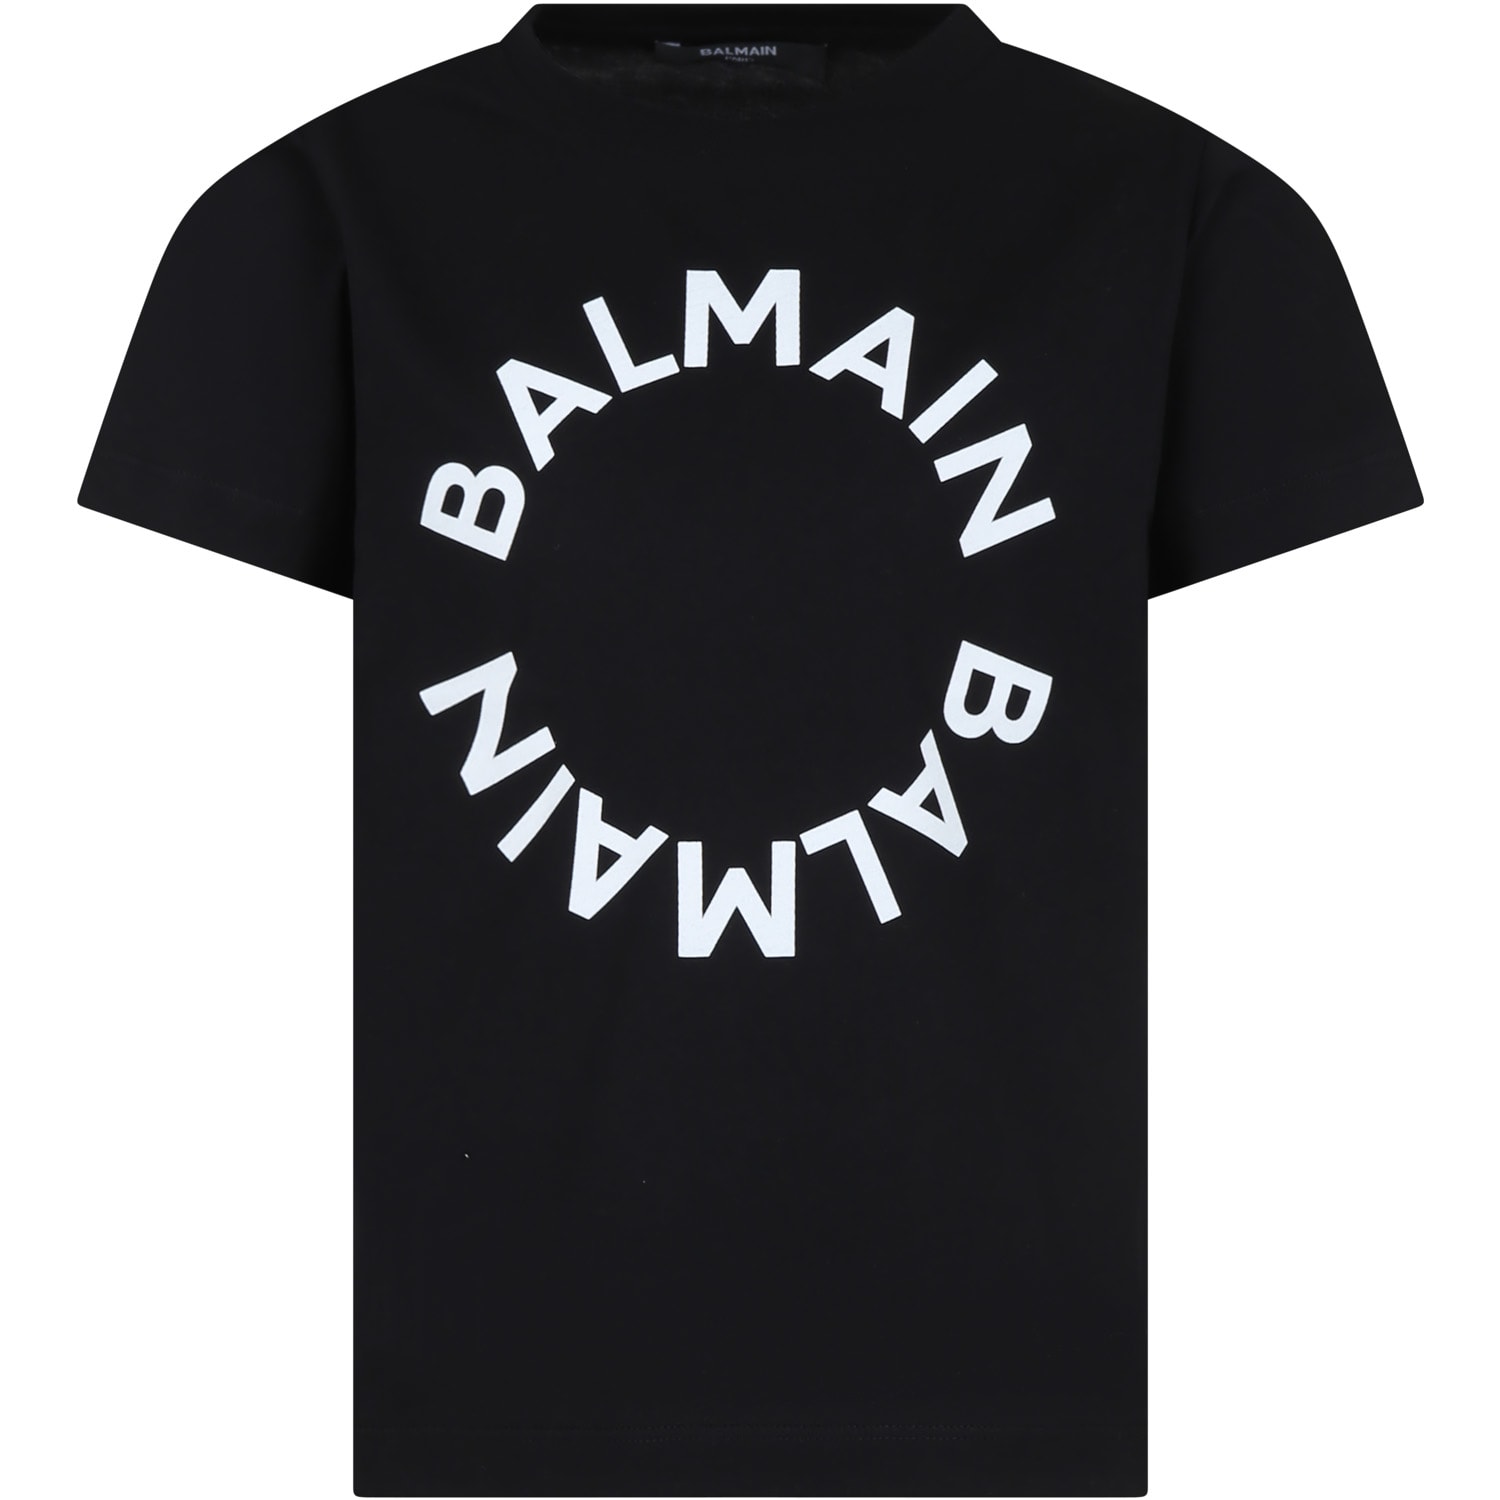 Shop Balmain Black T-shirt For Kids With Logo